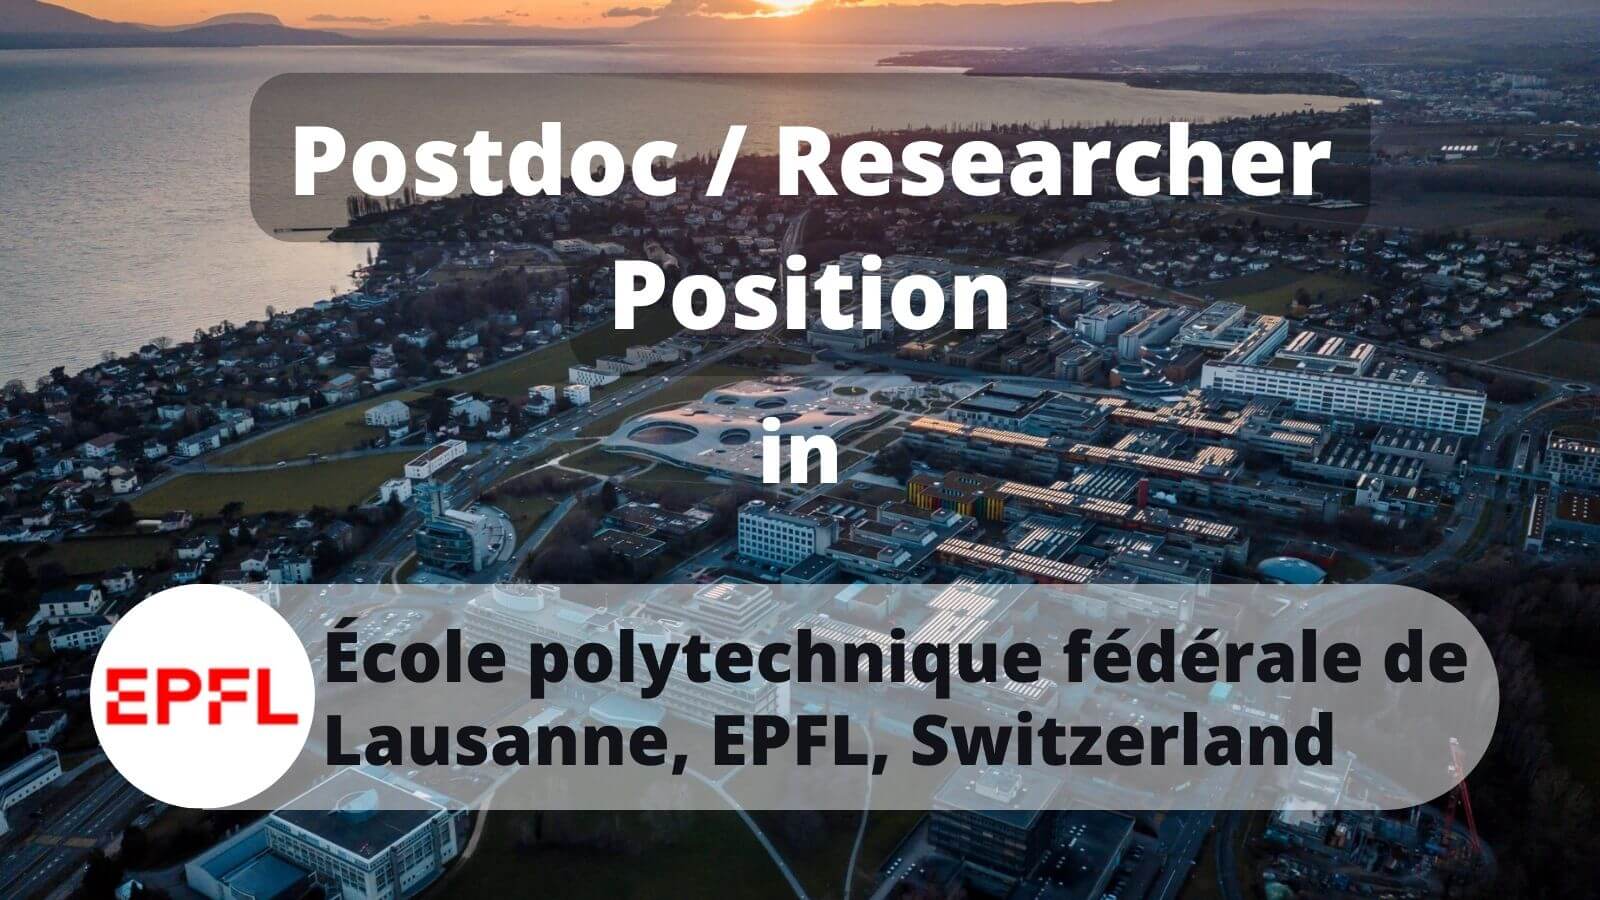 Postdoc Researcher Position in EPFL Switzerland